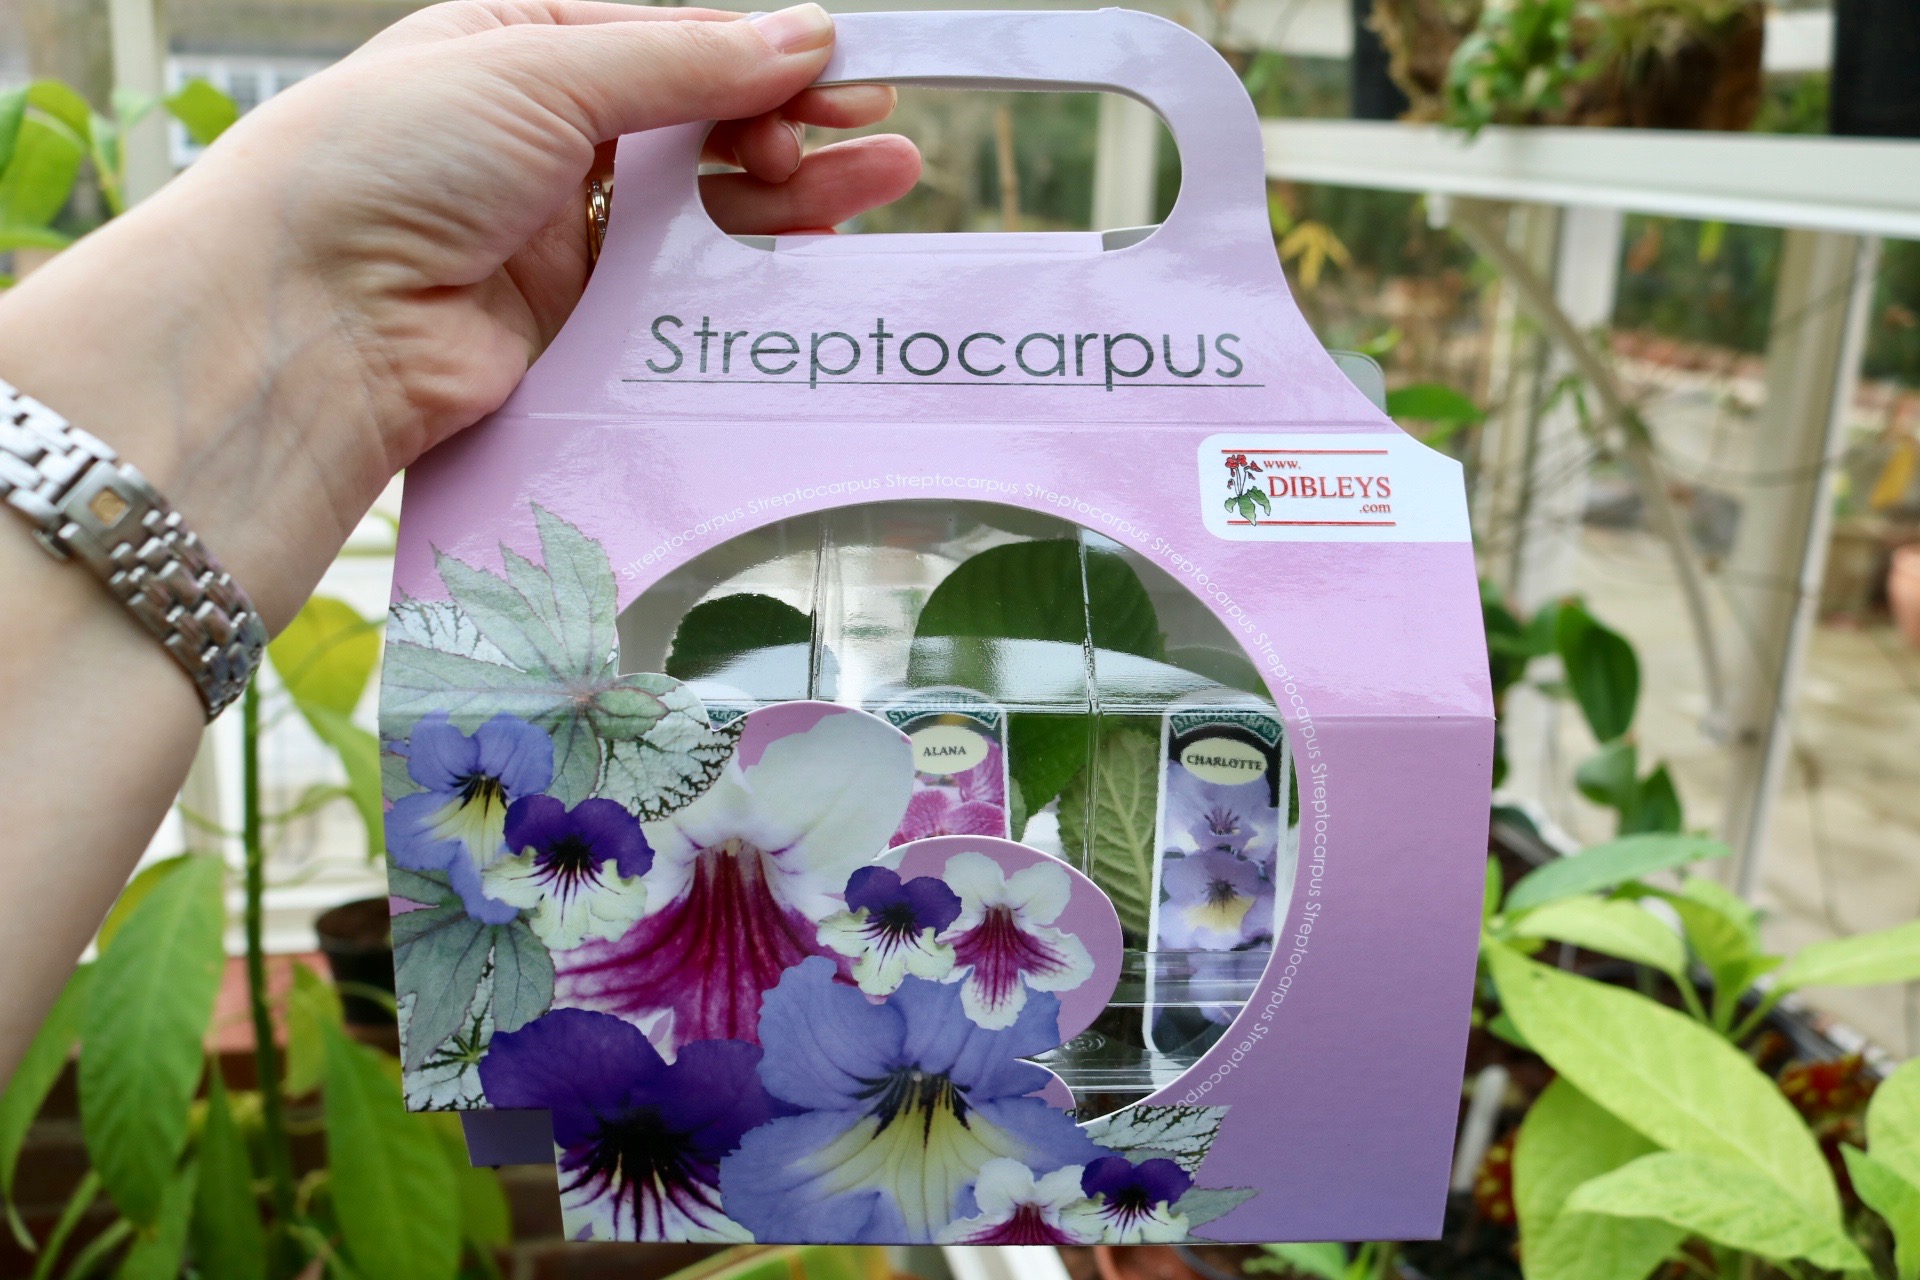 Streptocarpus plug plants